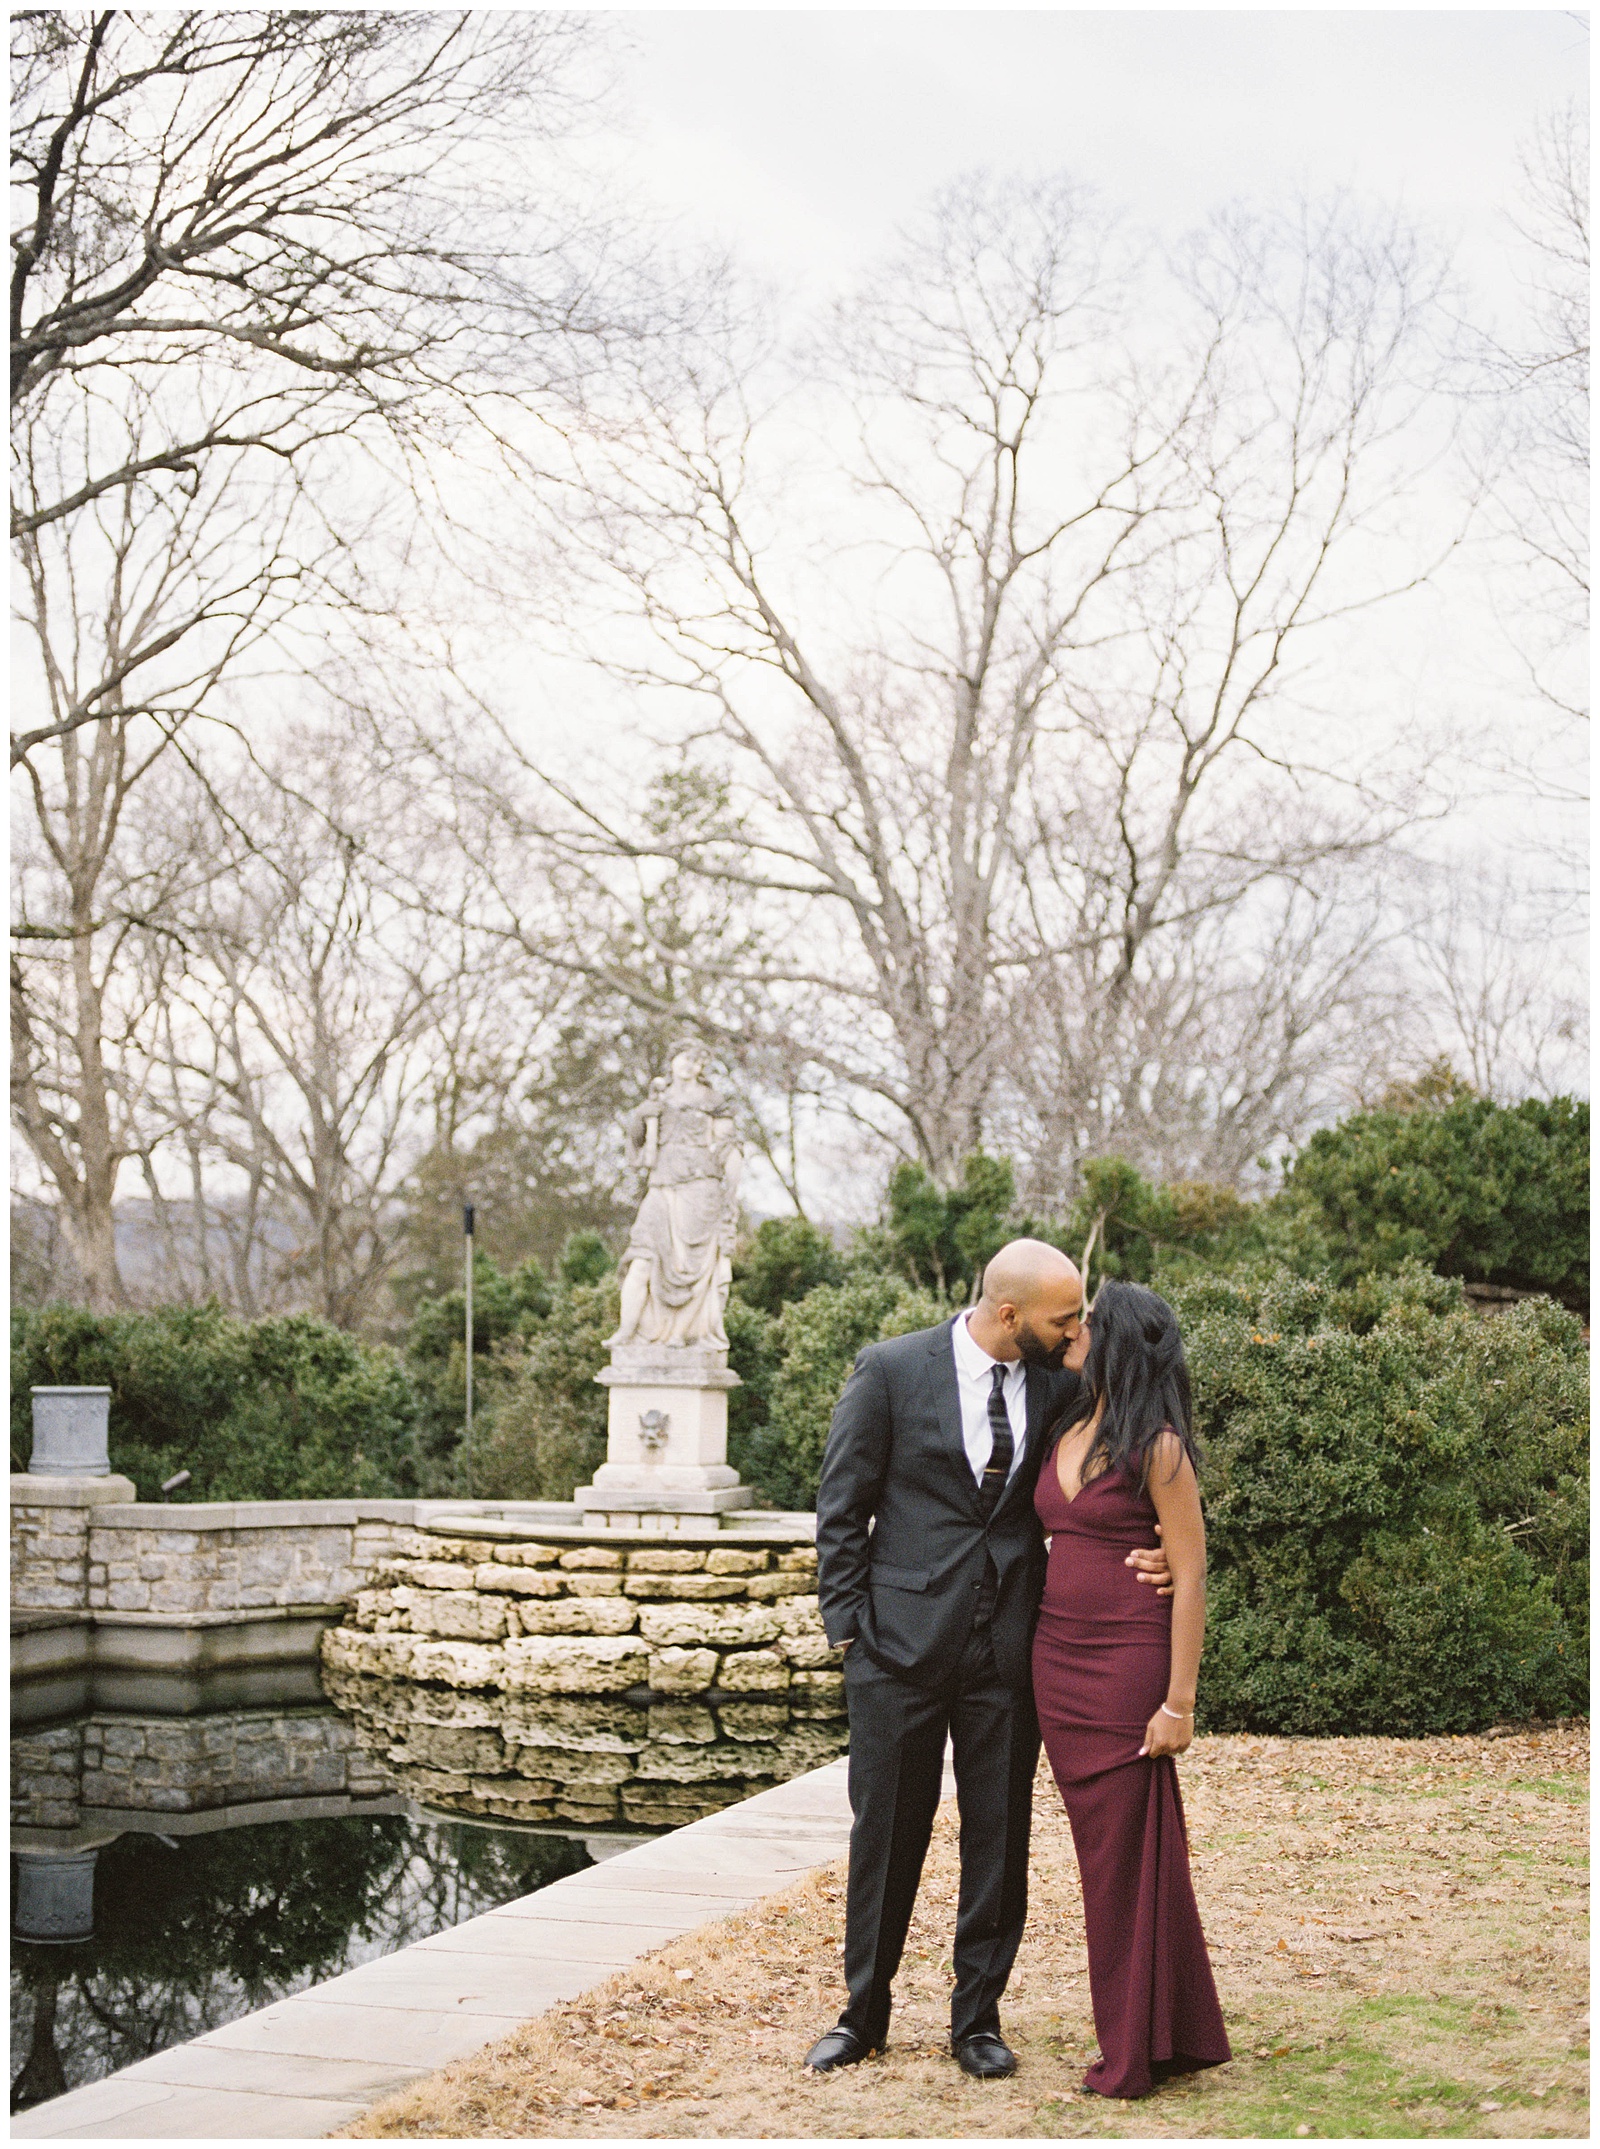 Cheekwood Estate Wedding Photographer | Chicago Wedding Photographers | Sarah Sunstrom Photography_0046.jpg